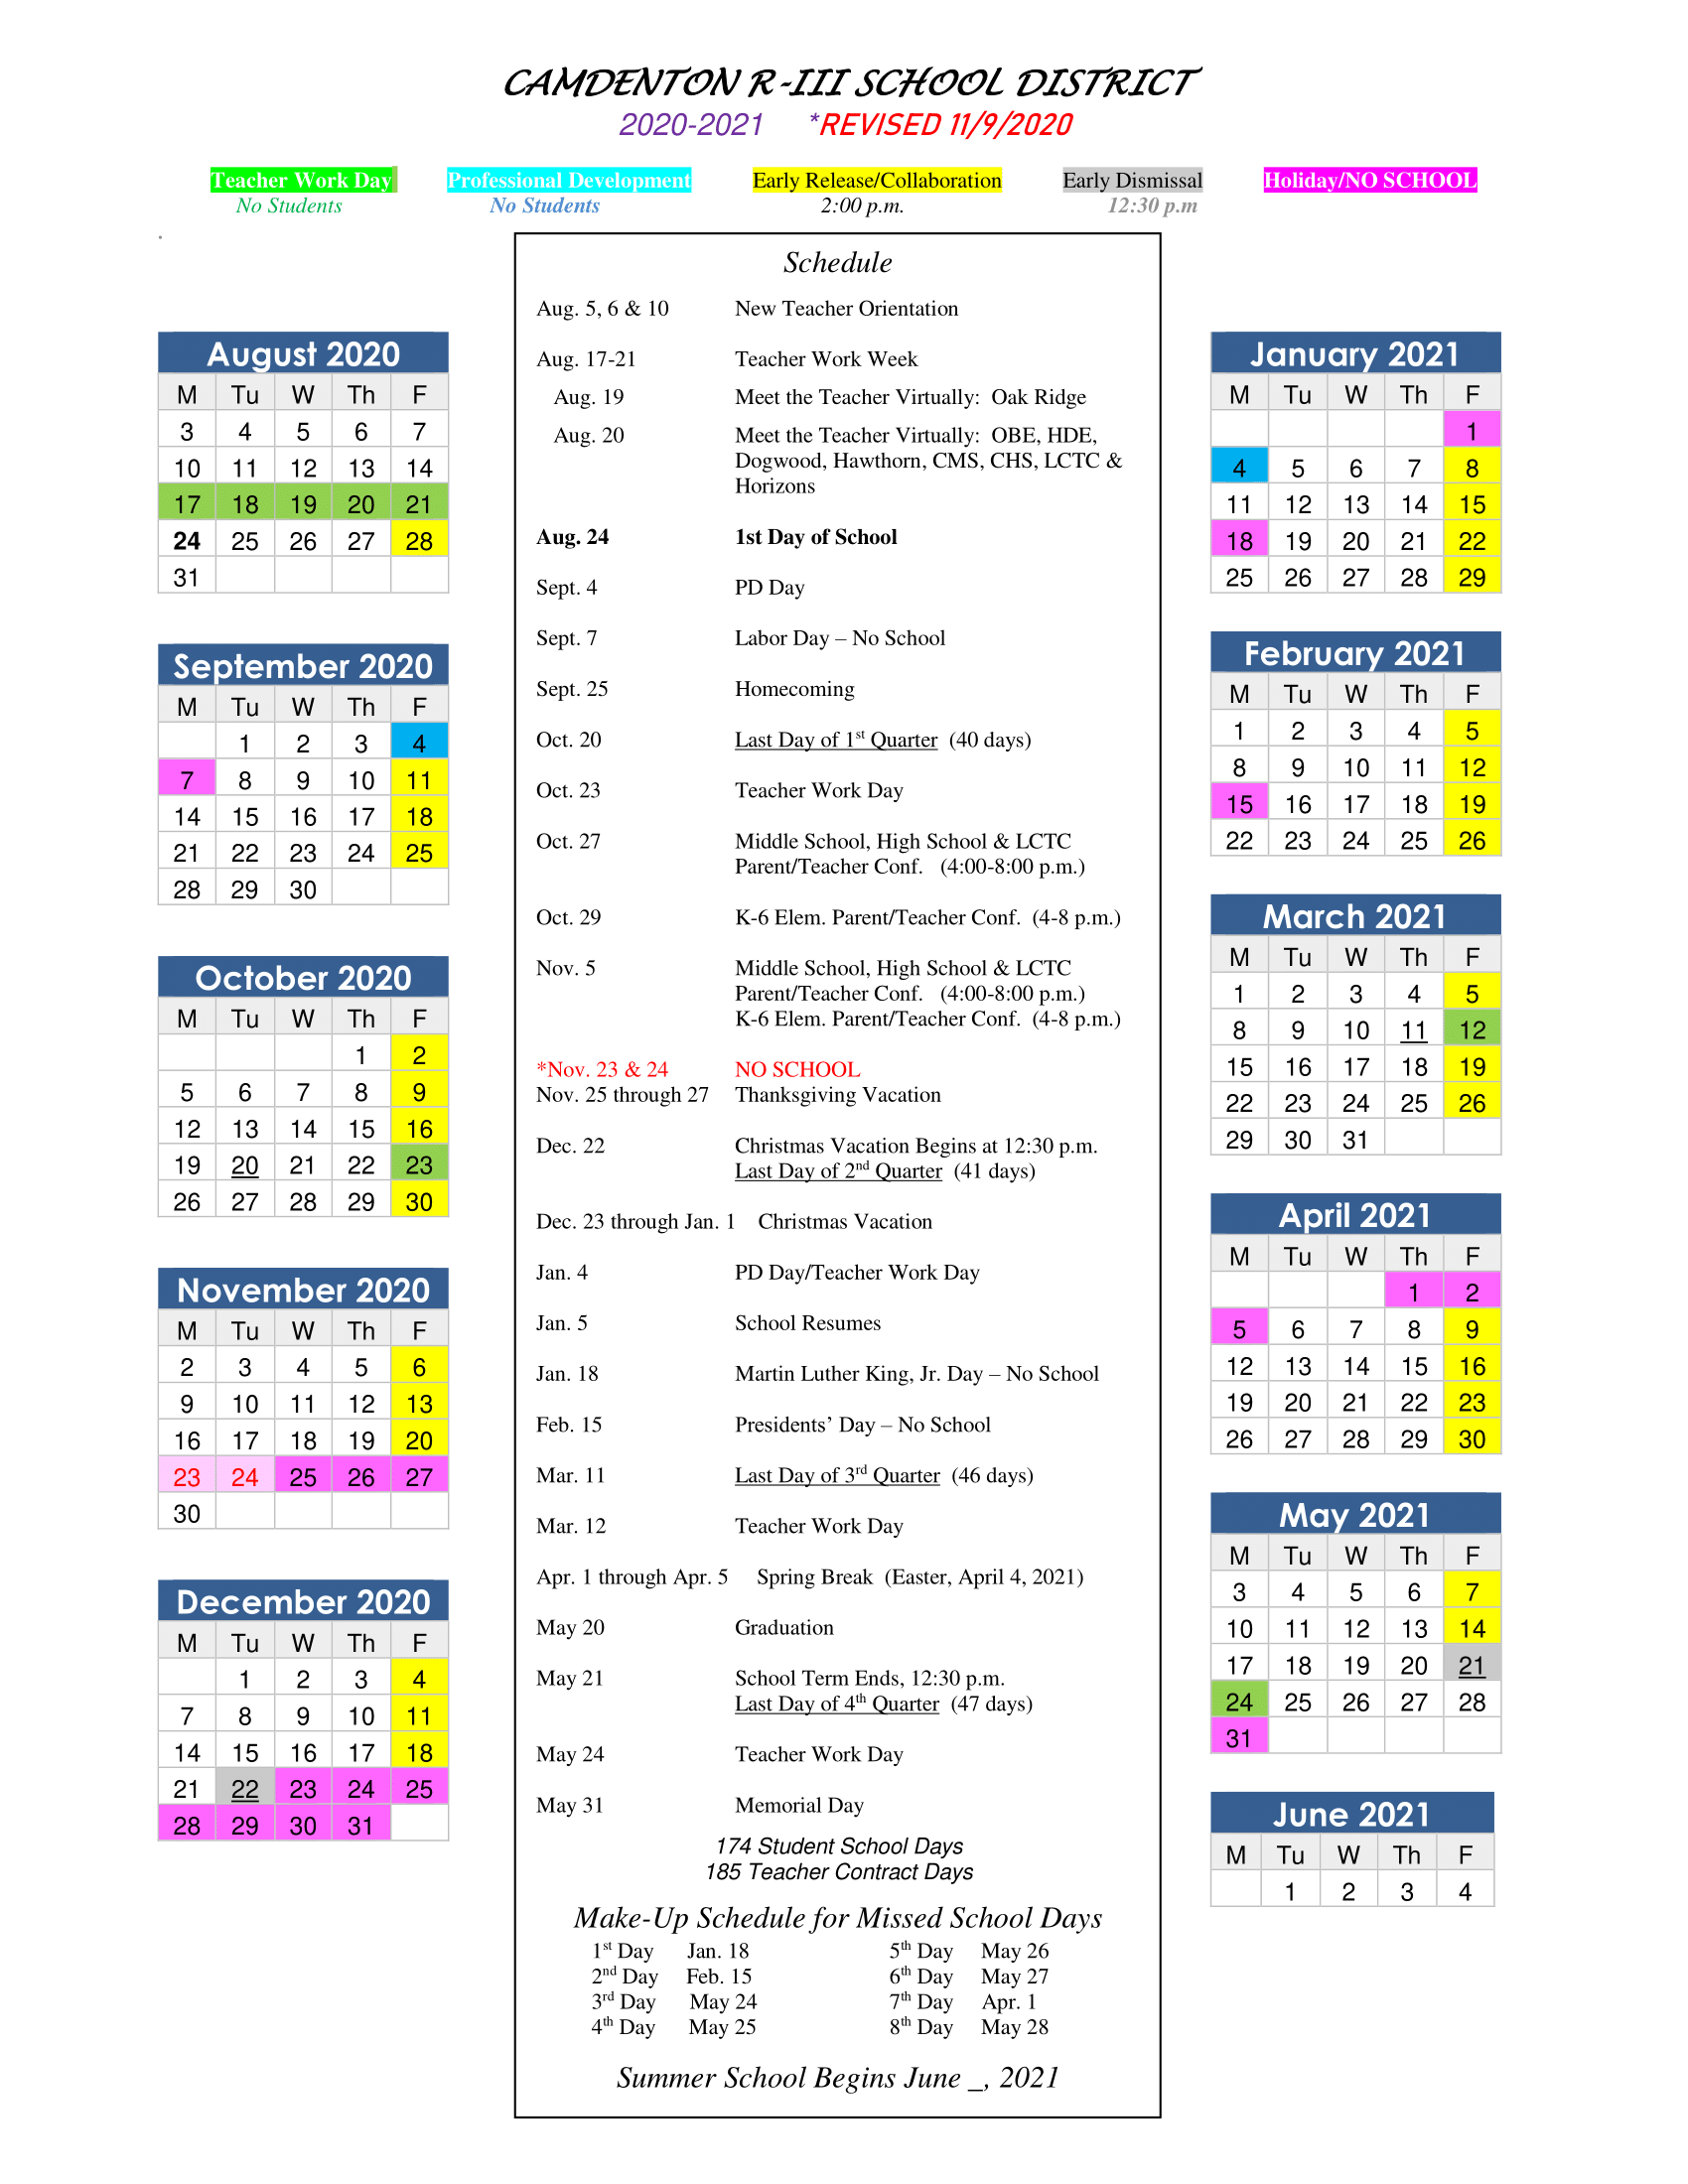 2020-2021 Calendar Revised 11/9/20